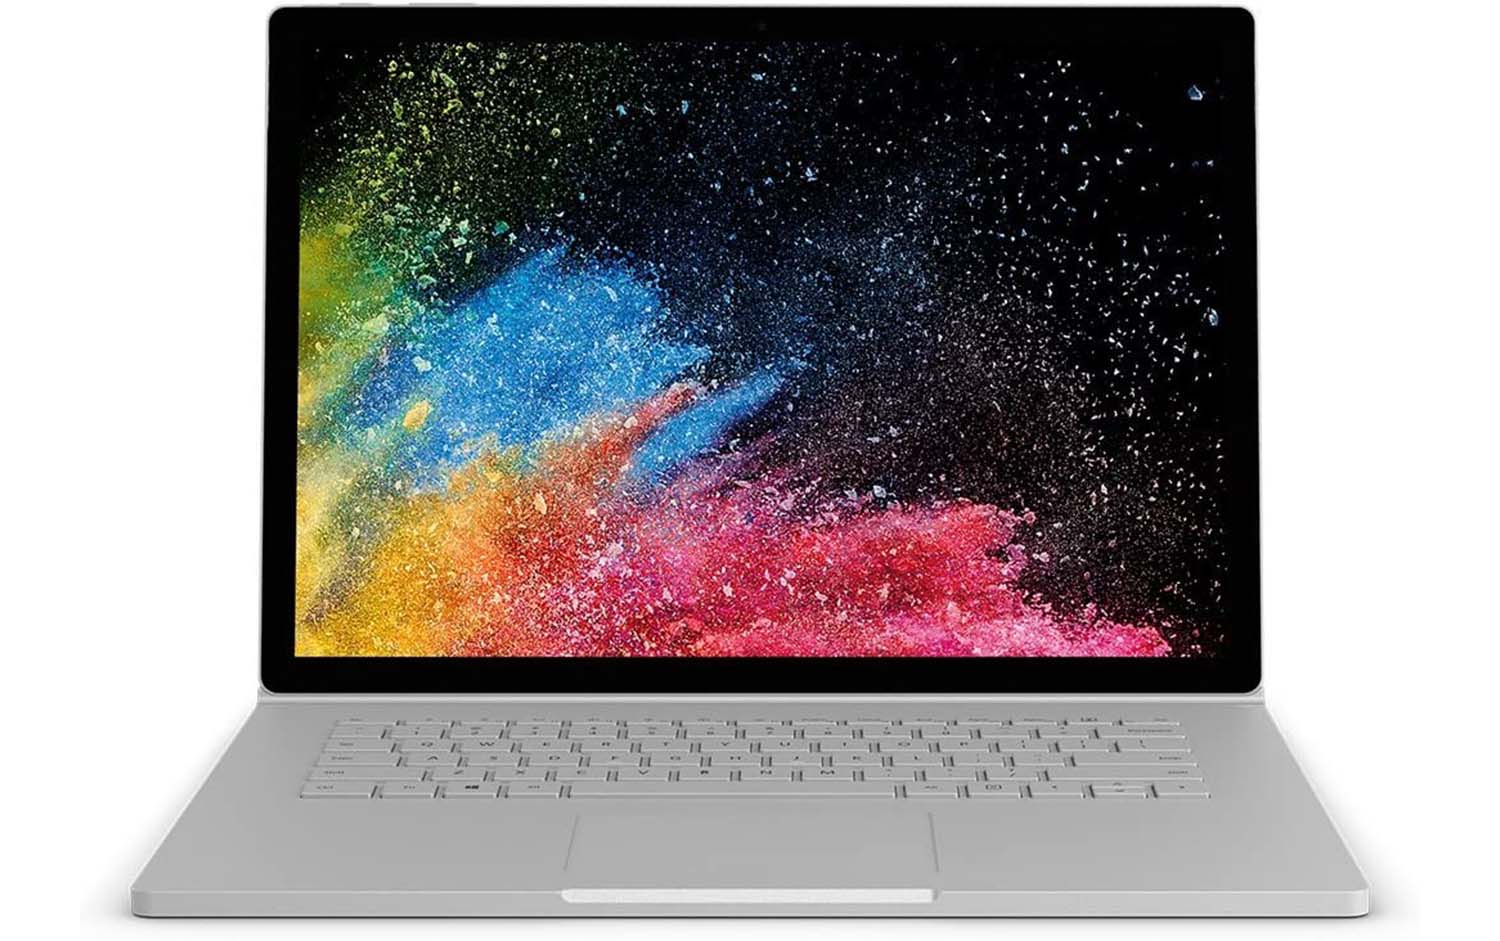 Microsoft Surface Book 2 Intel Core i7 8th Gen 16GB RAM 256GB SSD Touchscreen Windows 10 Pro Nvidia GeForce GTX 1060